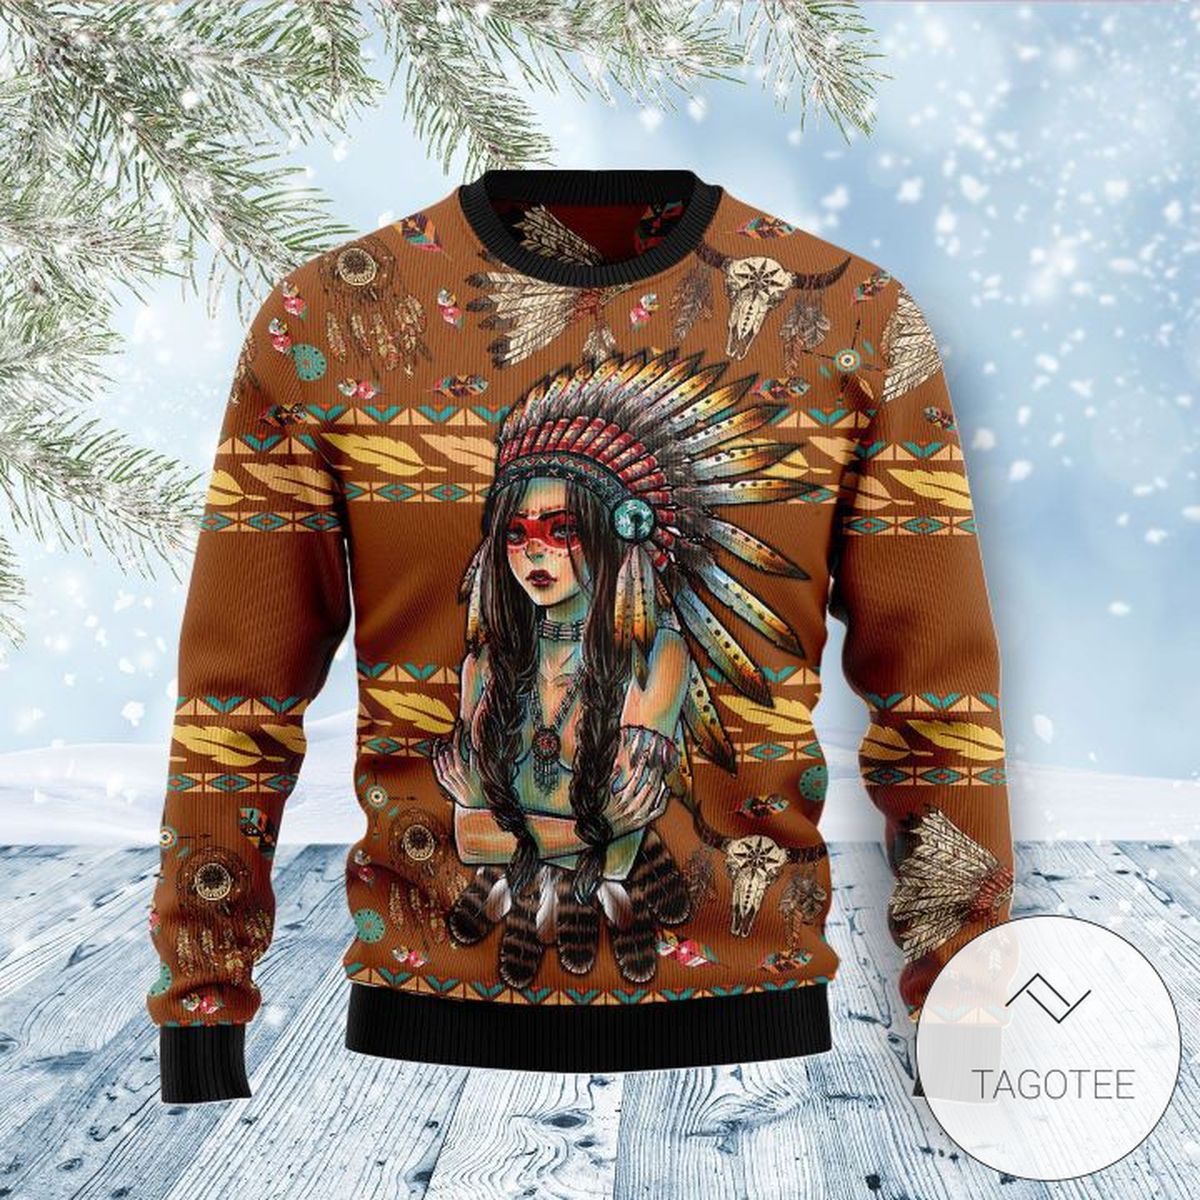 Native American Girl Sweatshirt Knitted Ugly Christmas Sweater